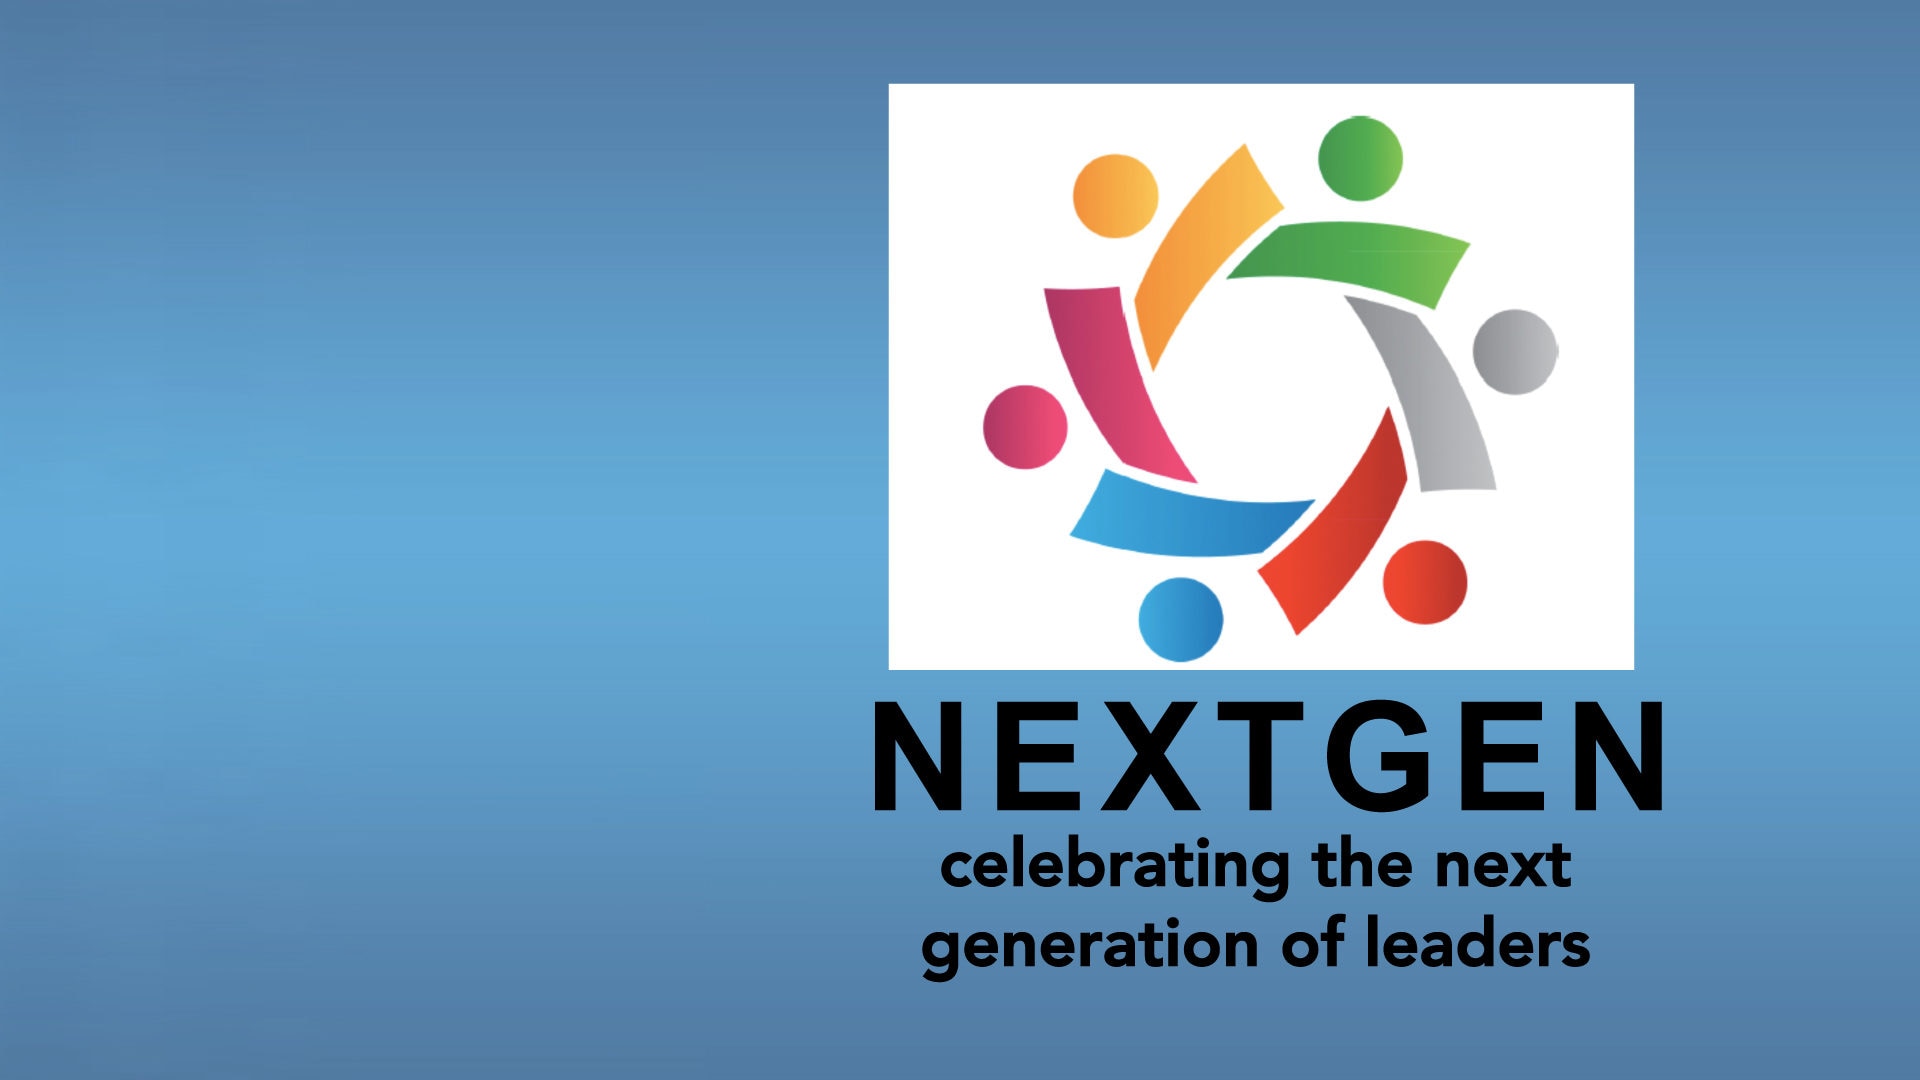 BBVA Compass sponsors NextGen, a contest for Birmingham City School's students and teachers.